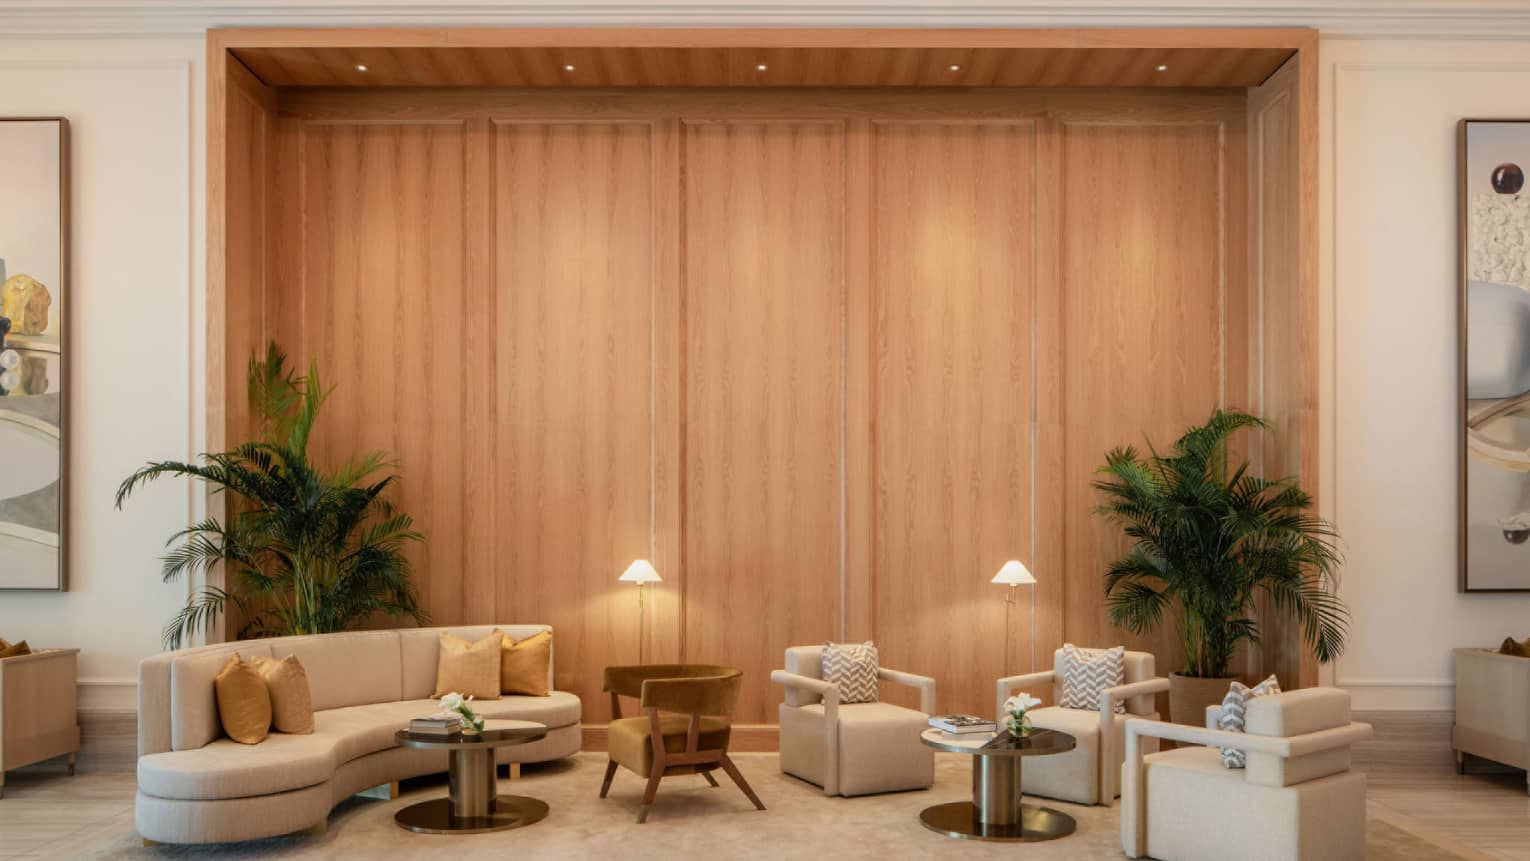 Elegant and modern hotel lobby